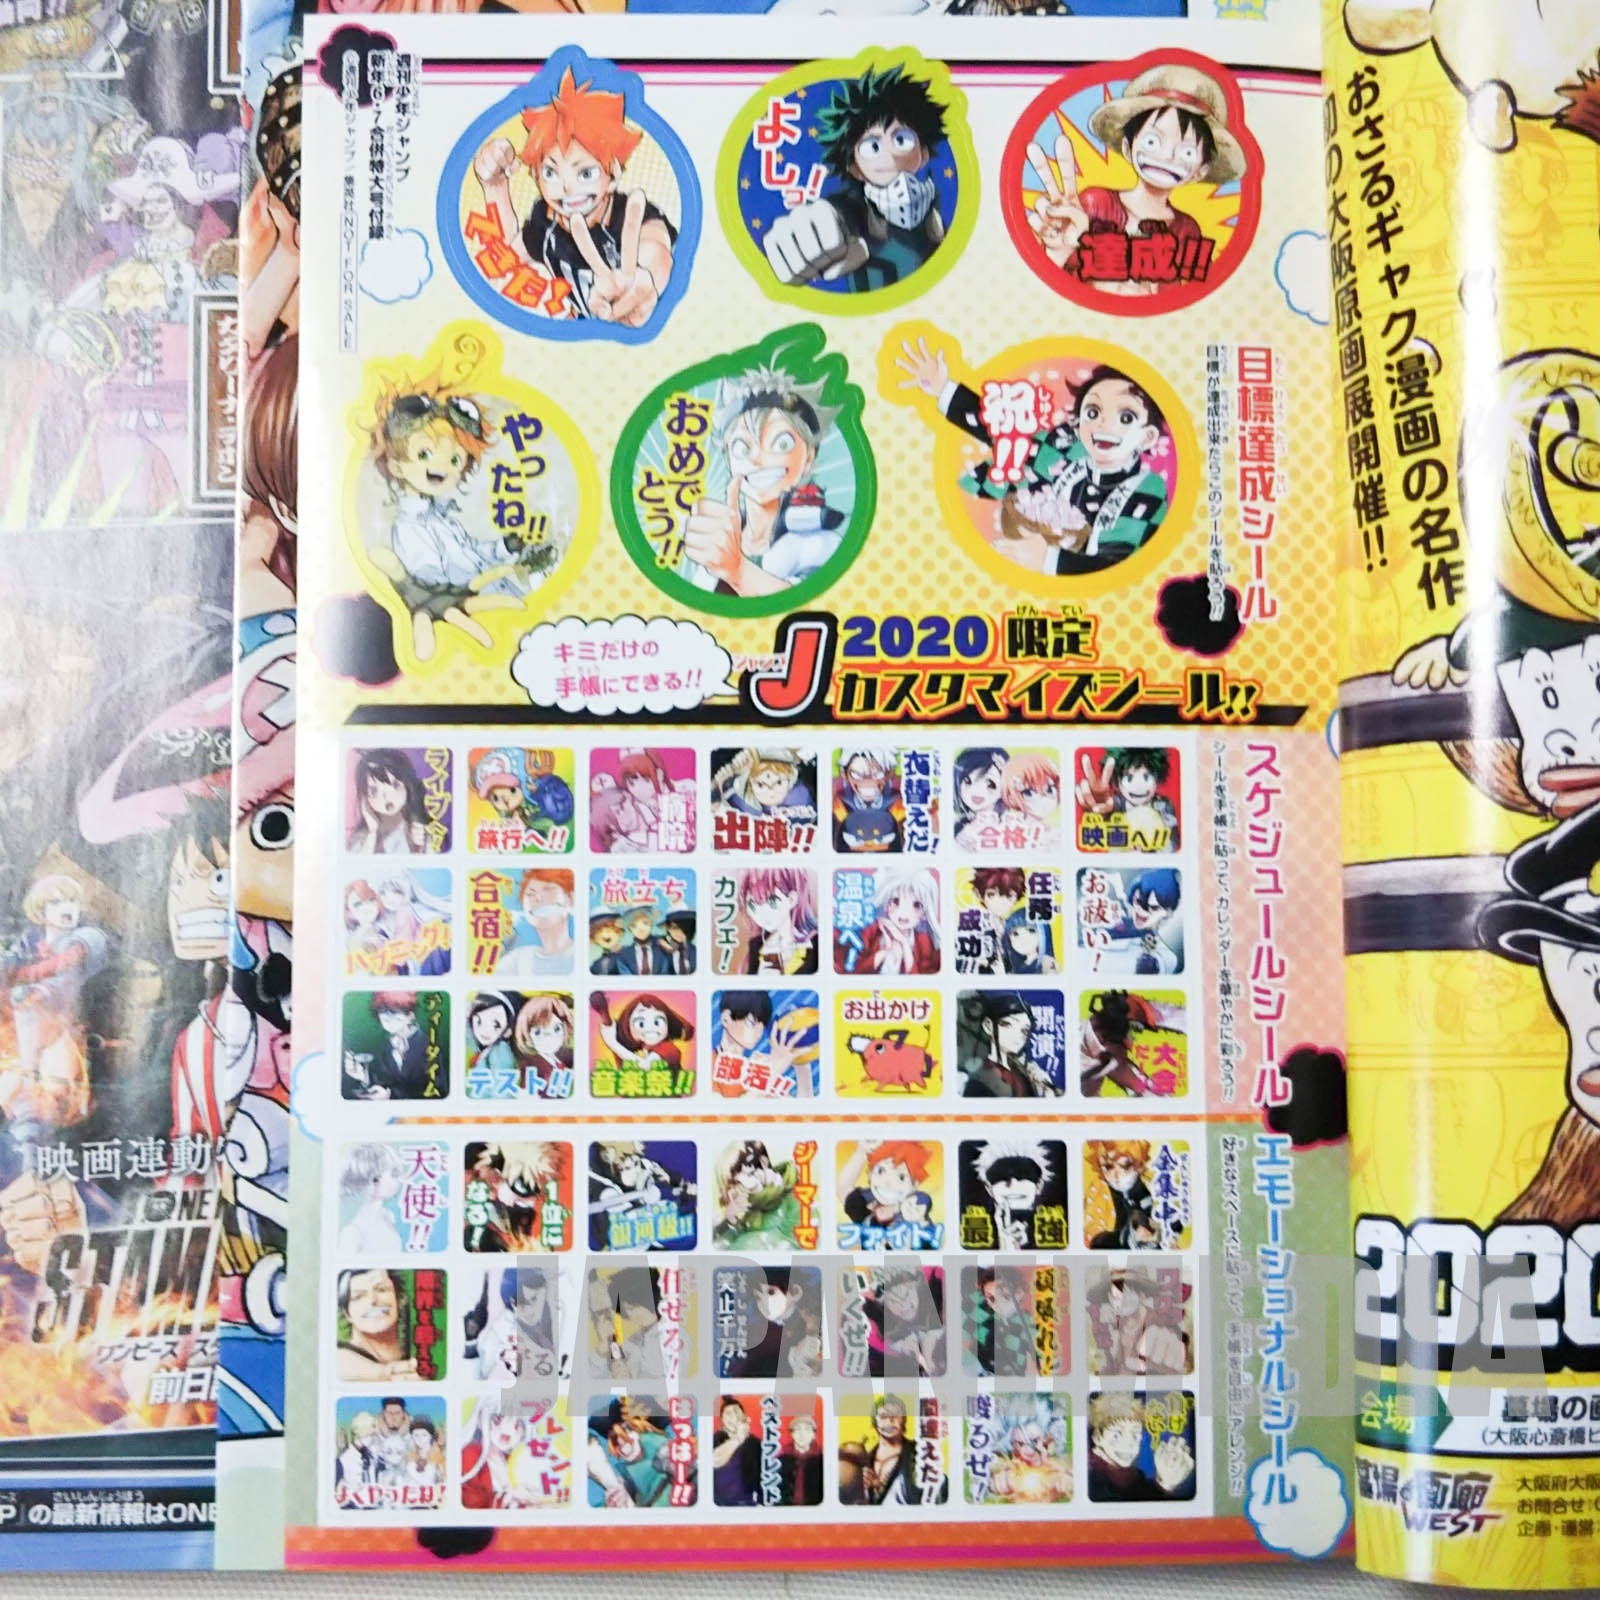 Weekly Shonen JUMP Vol.06-07 2020 (combined number) / Japanese Magazine JAPAN MANGA